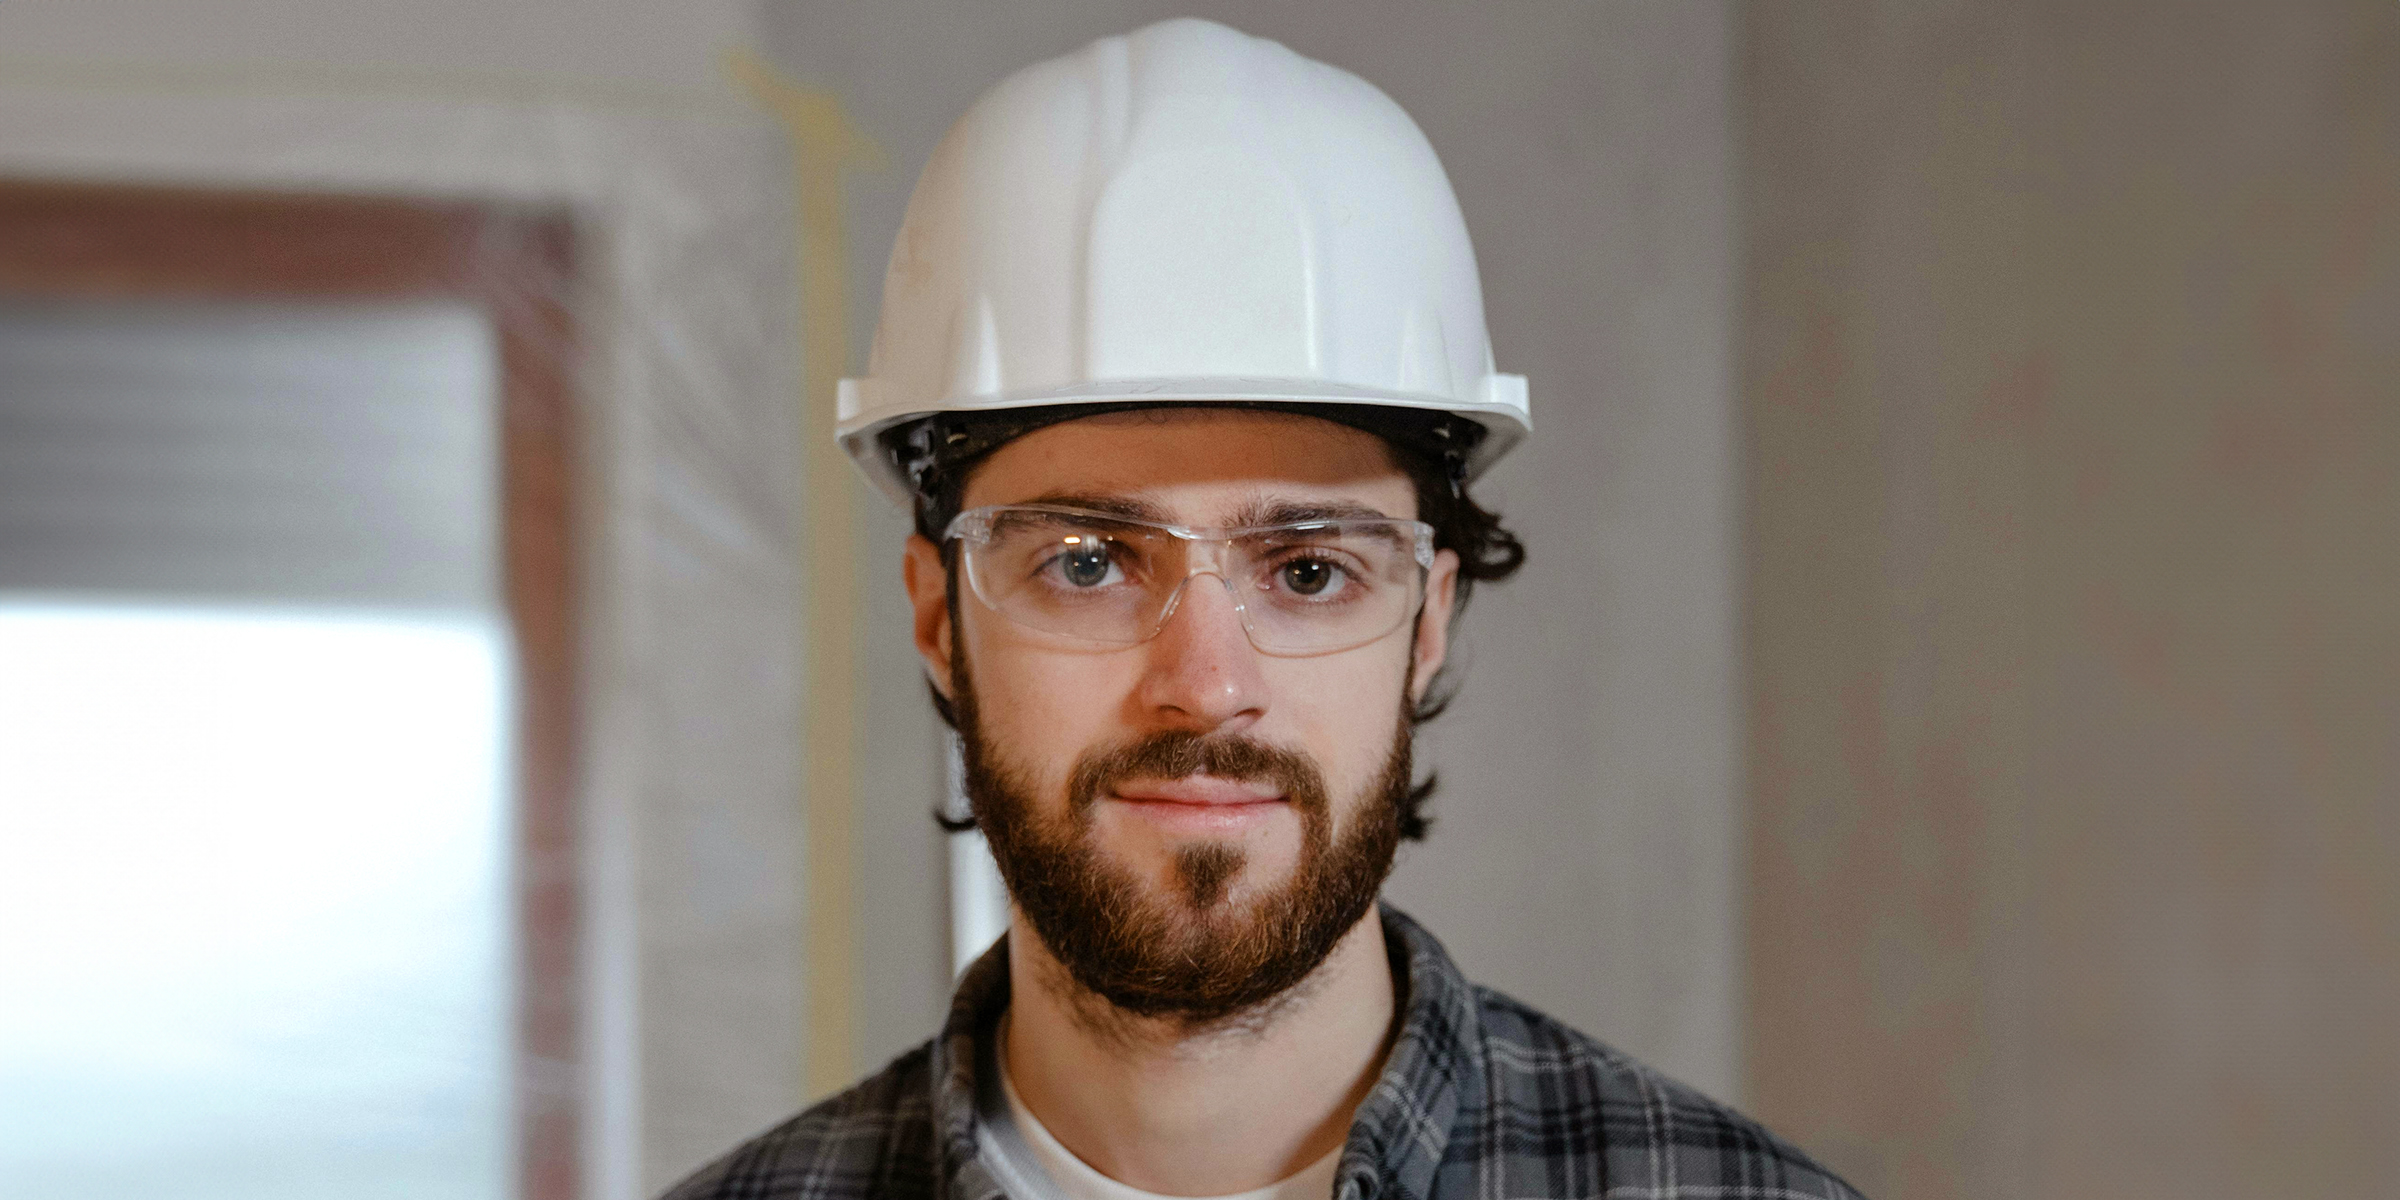 A serious-looking construction worker | Source: pexels.com/tima-miroshnichenko